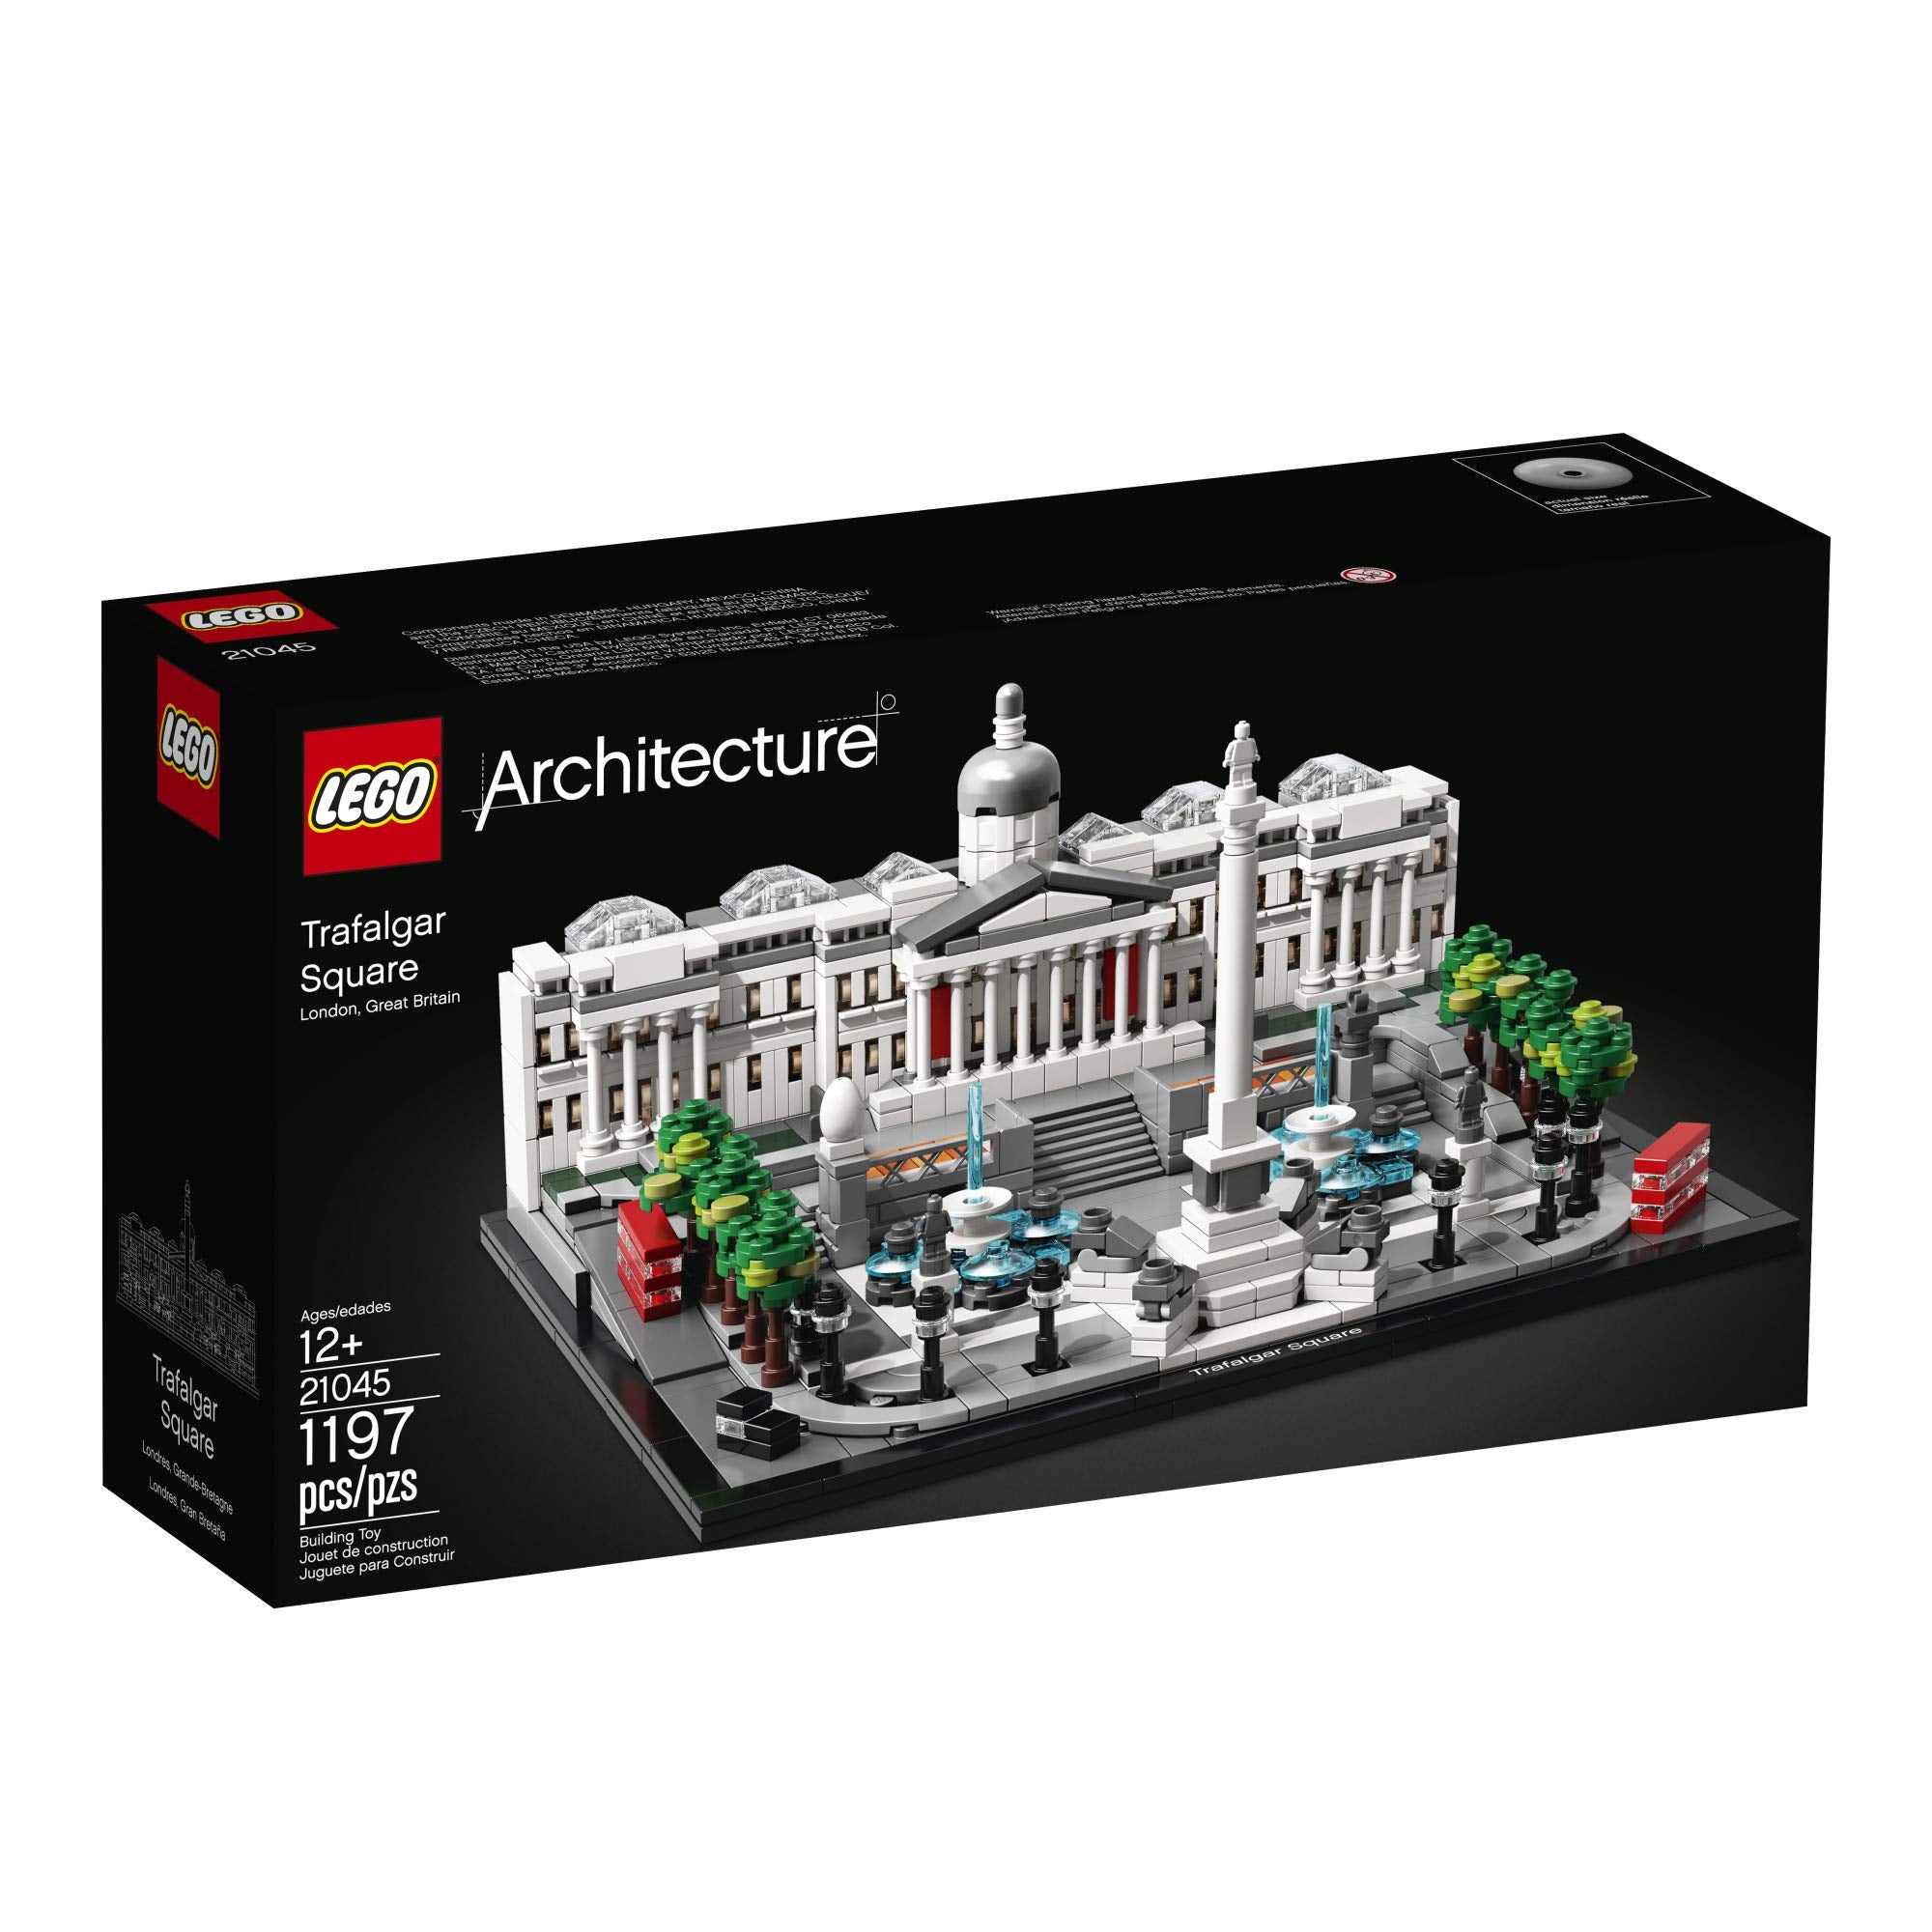 LEGO Architecture 21045 Trafalgar Square Building Kit, New 2019 (1197 Pieces)